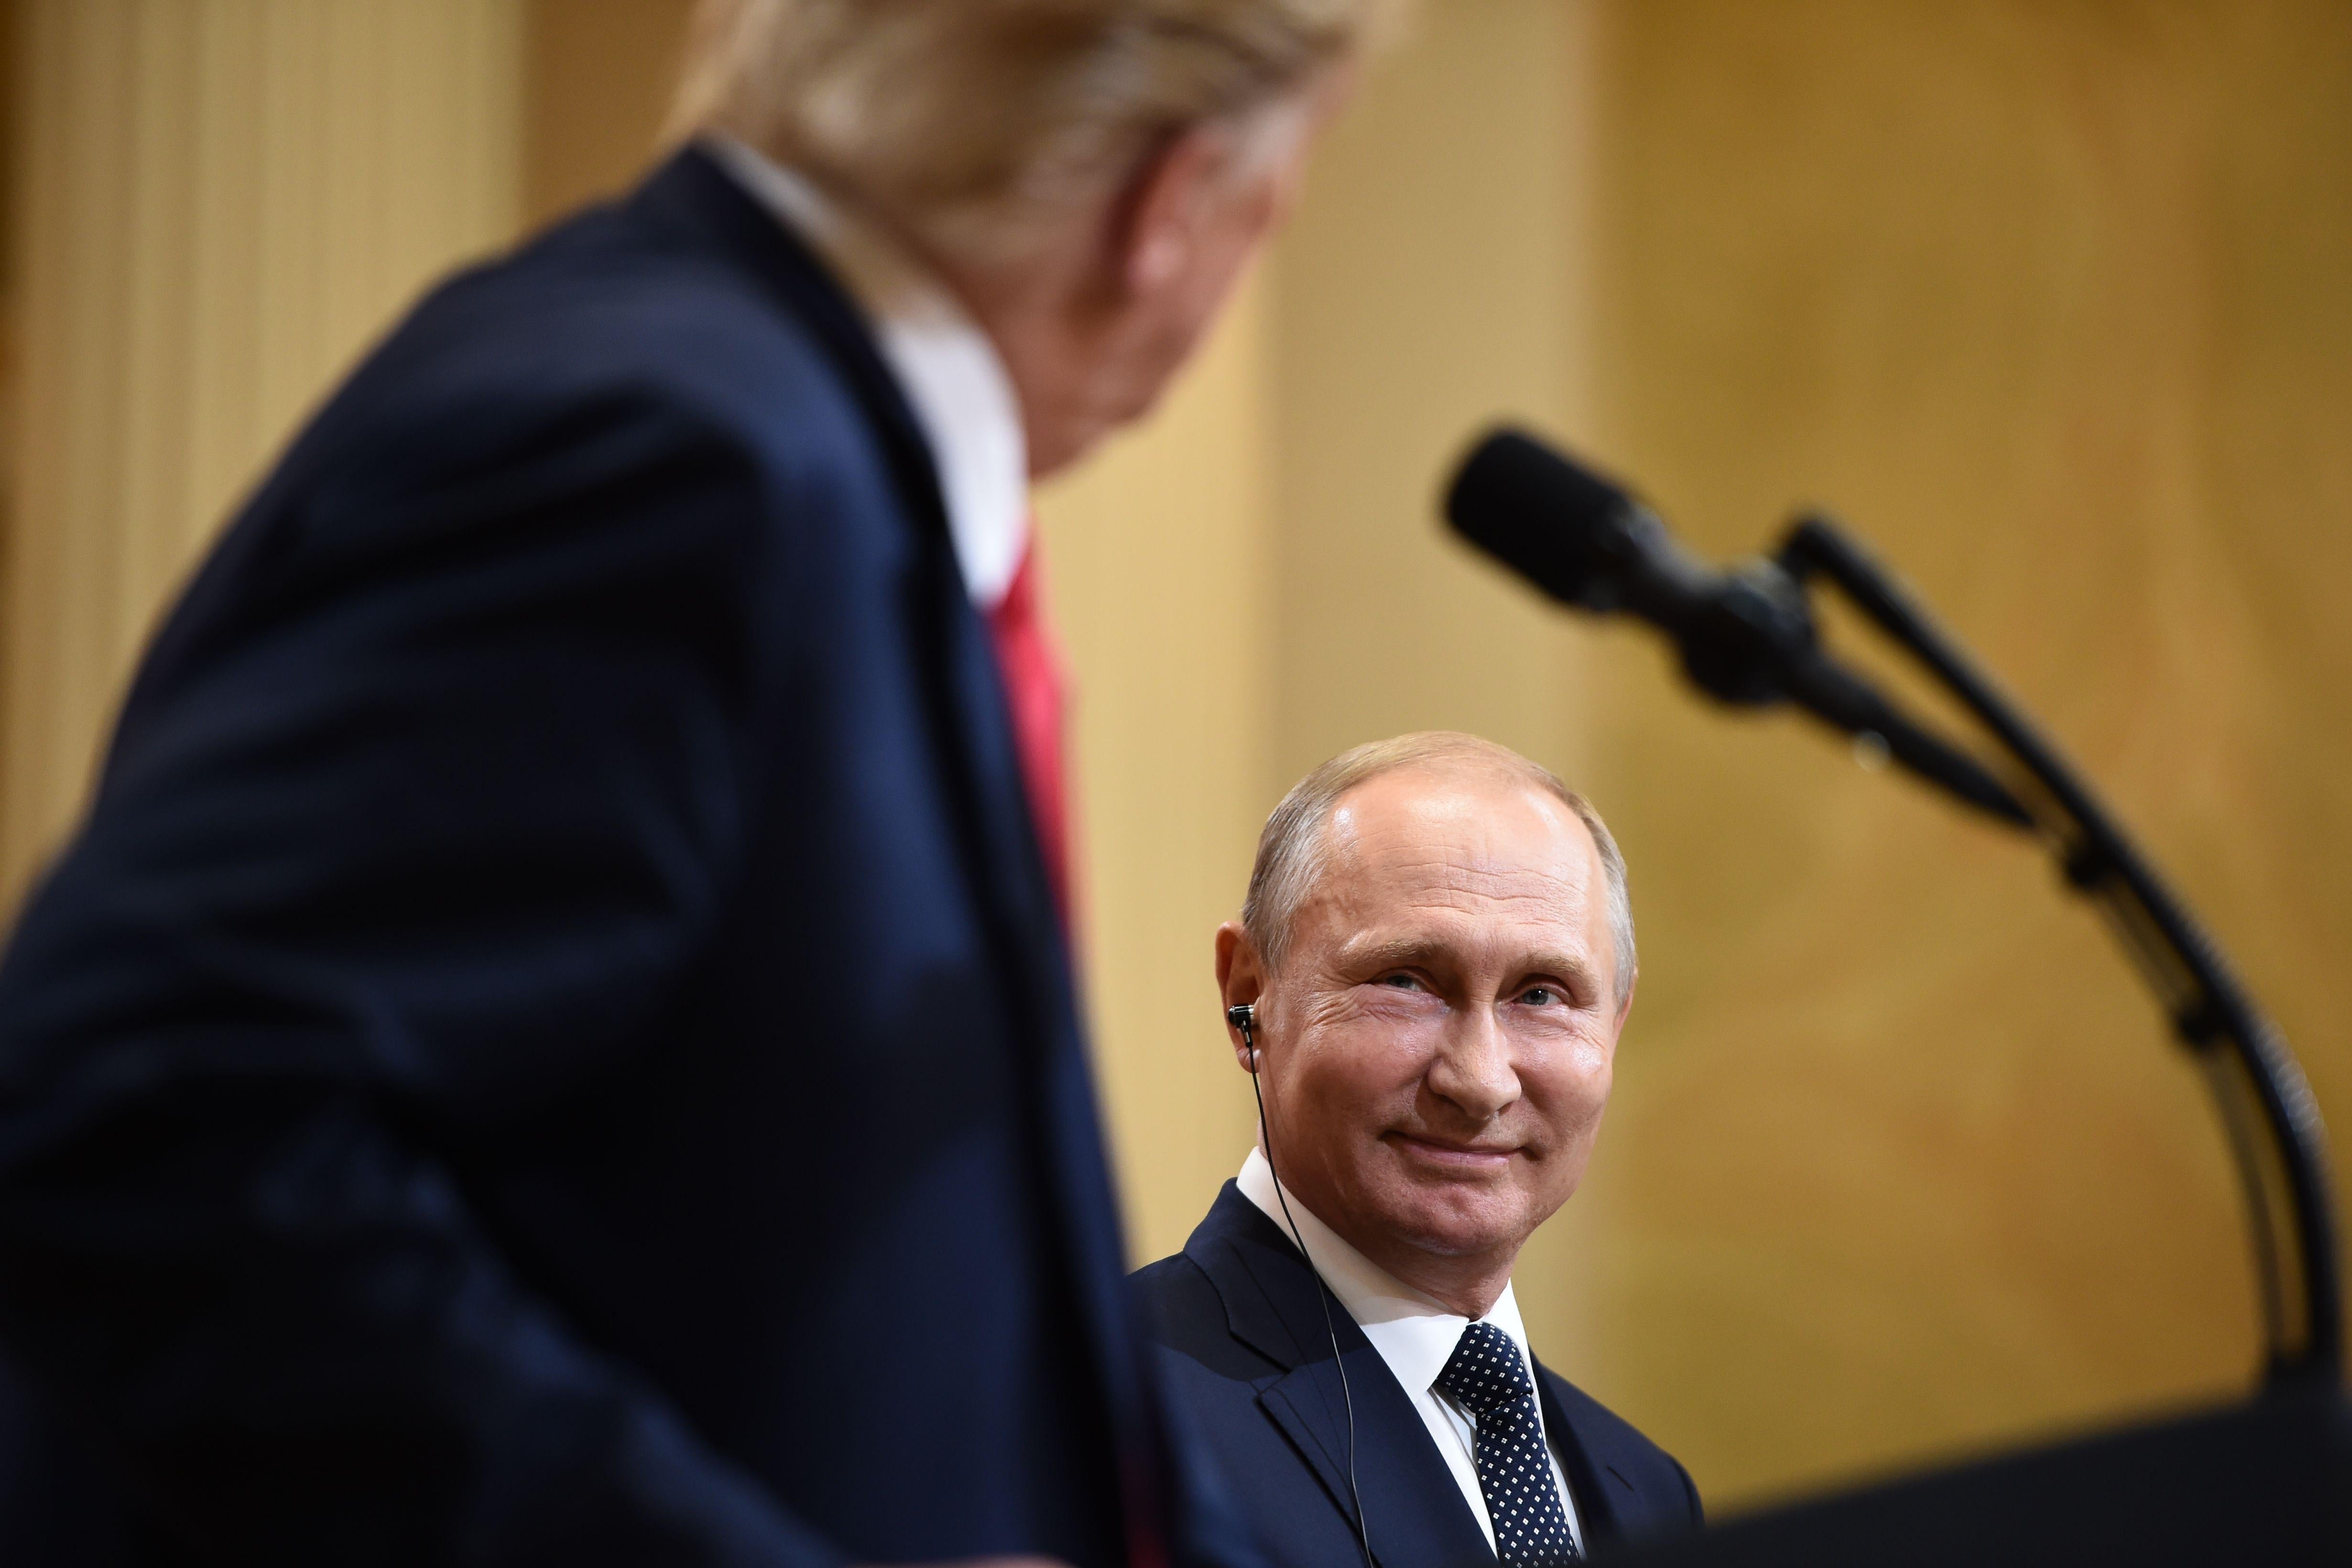 Putin smiles as Trump looks on.